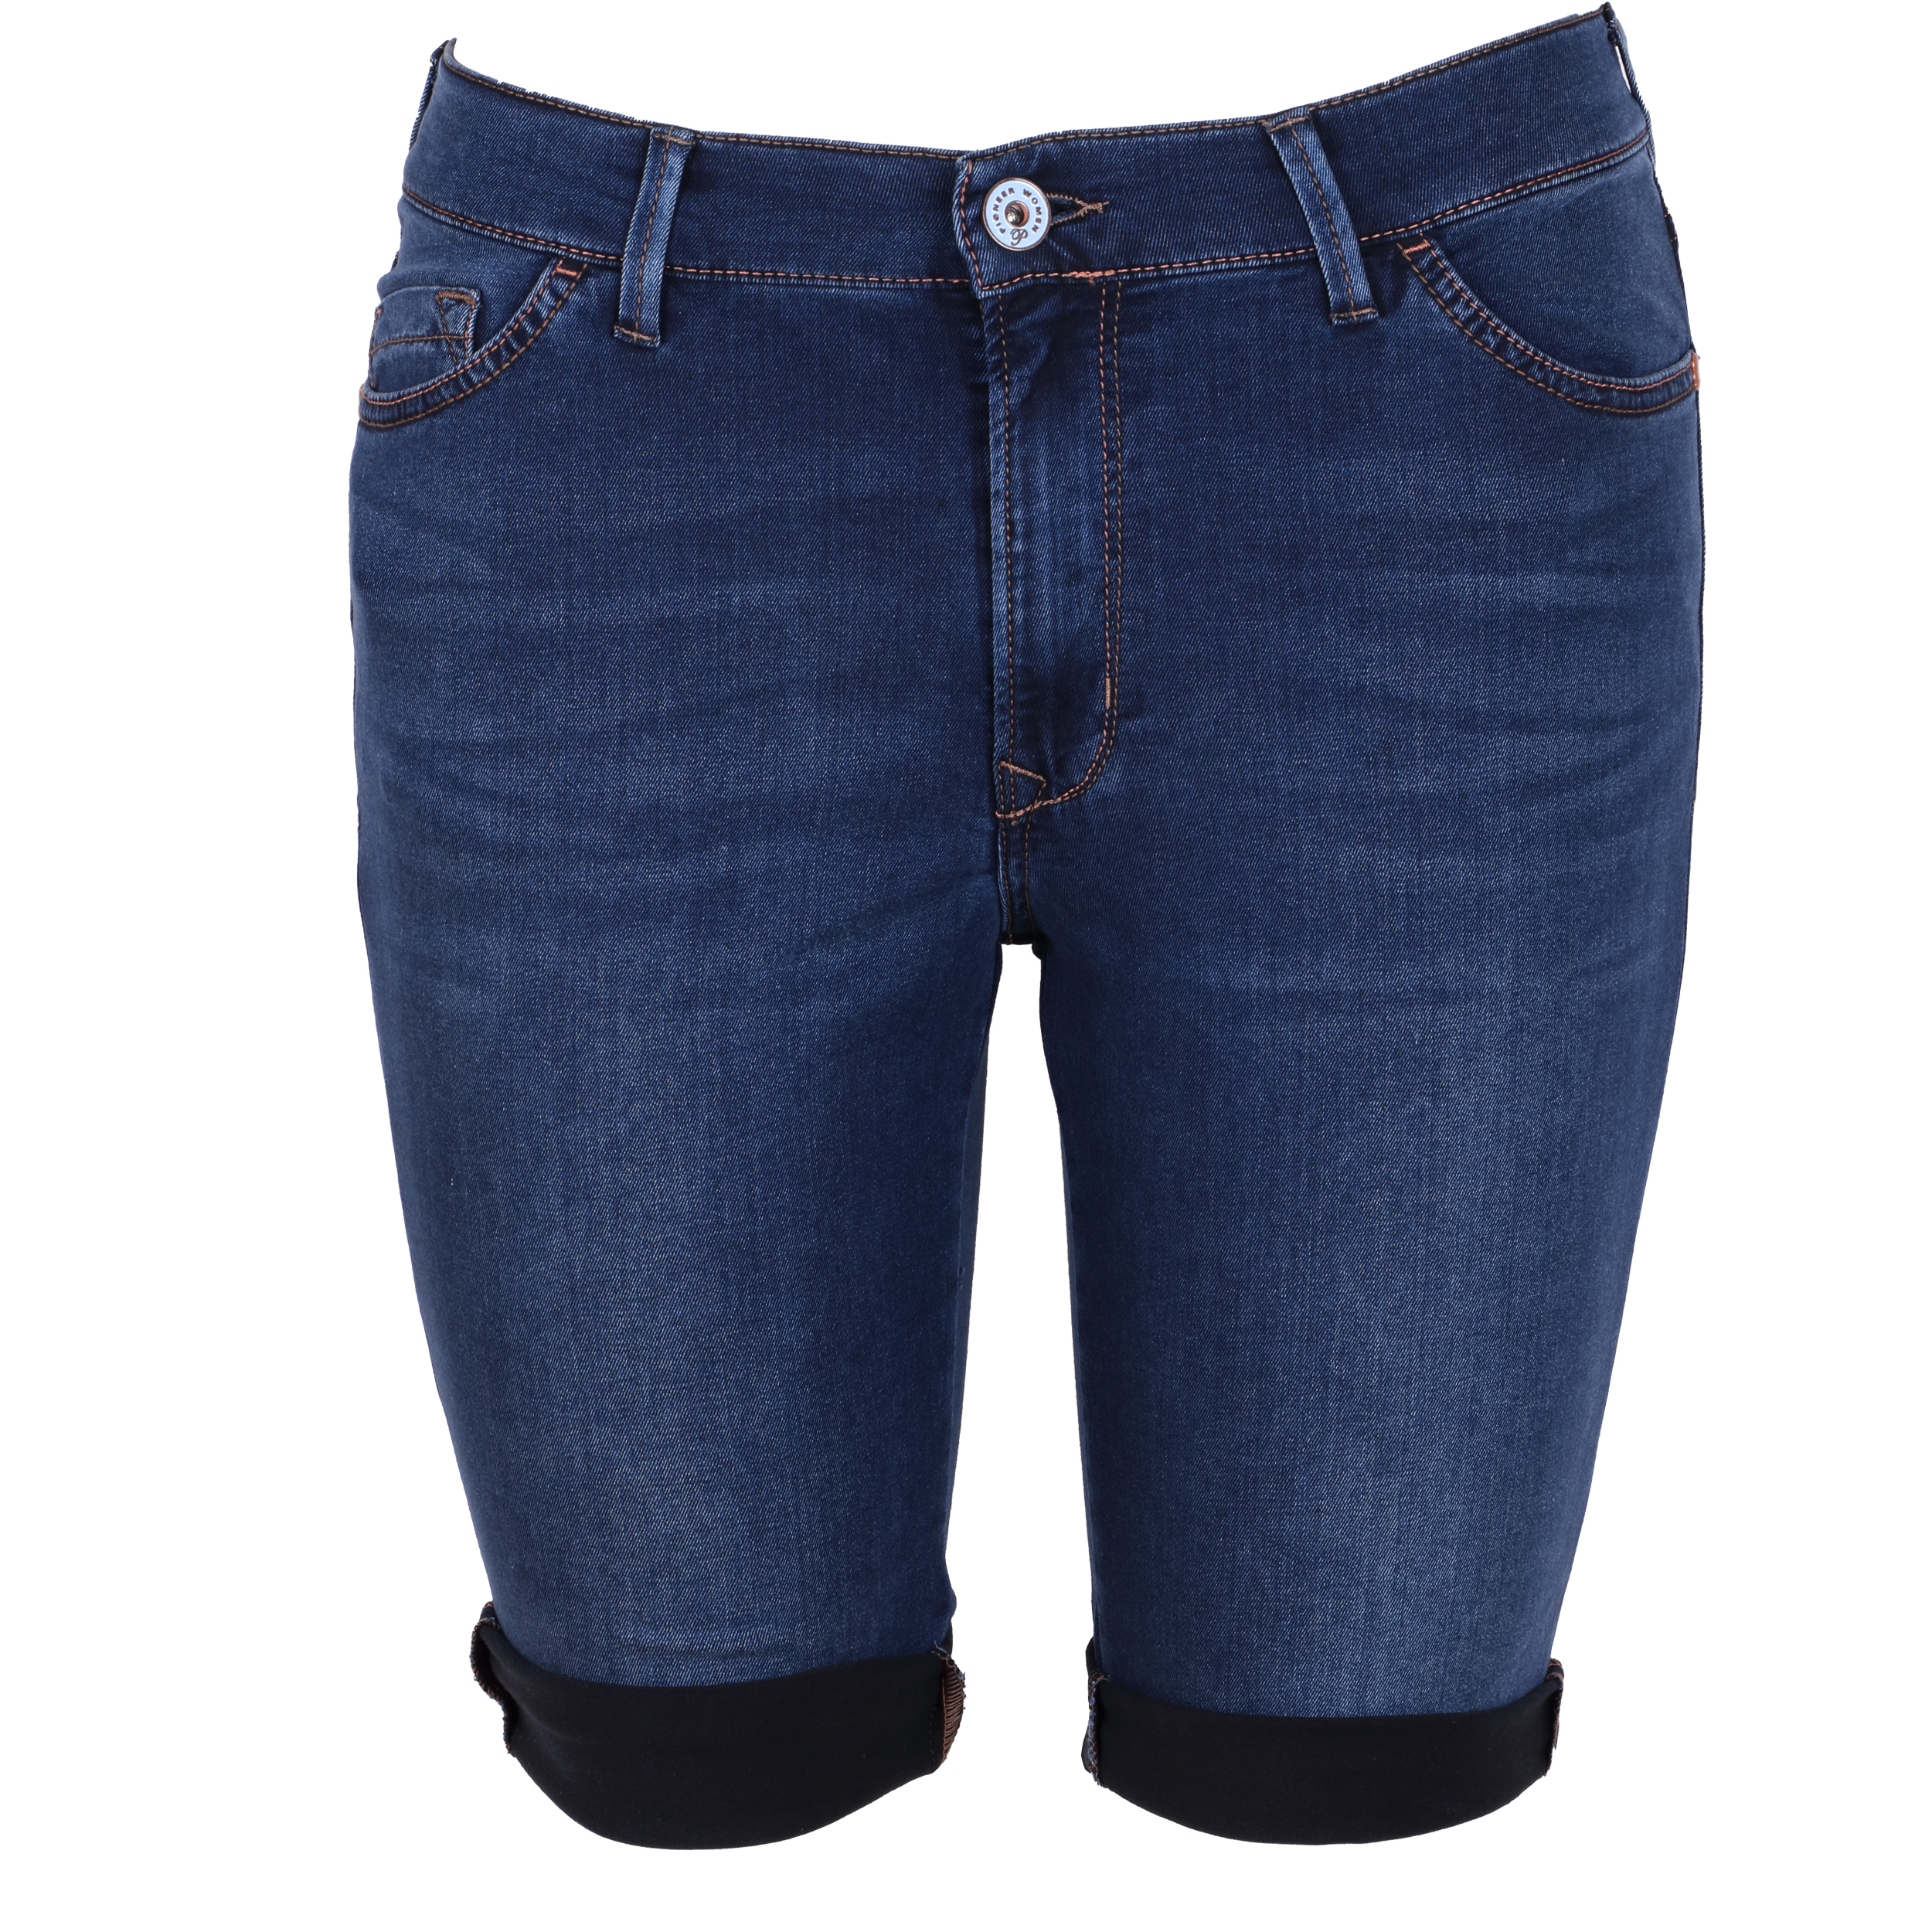 Pioneer Damen Jeans-Shorts 36 blau